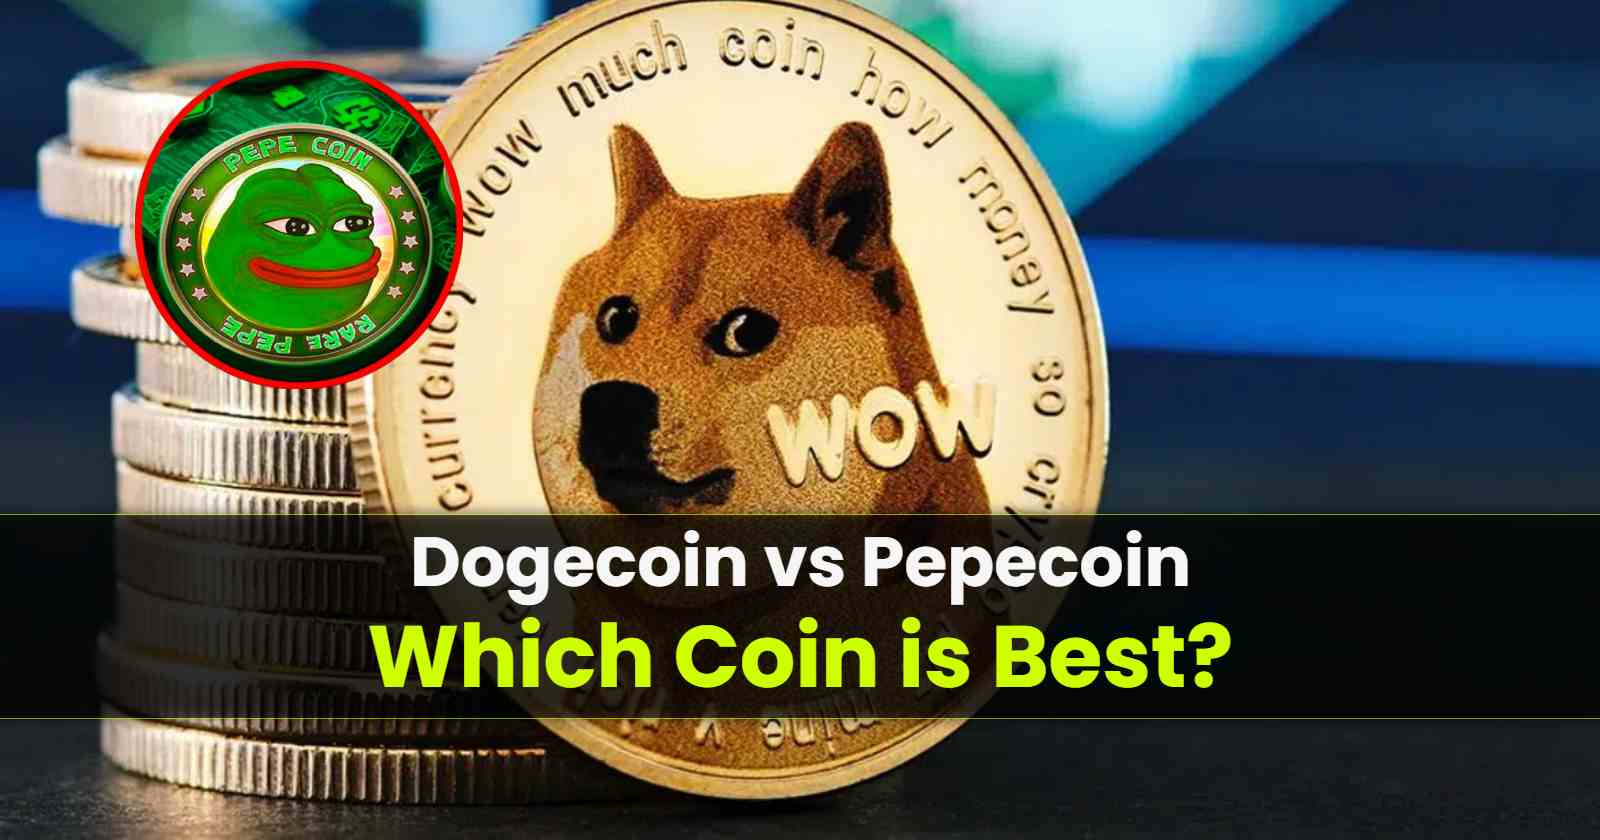 Dogecoin vs Pepecoin